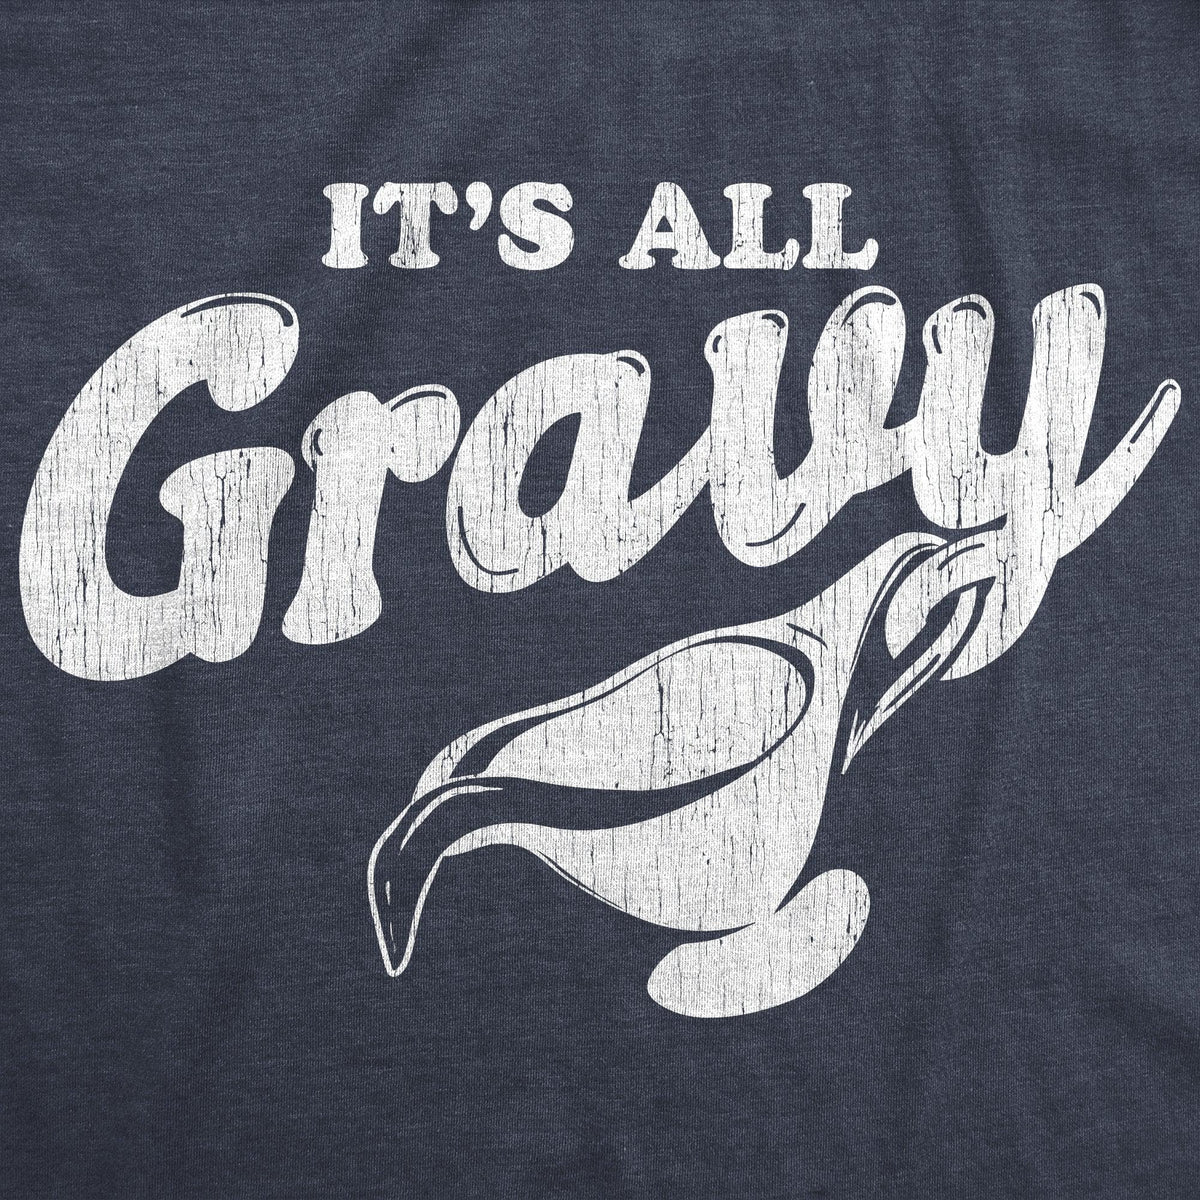 It&#39;s All Gravy Women&#39;s Tshirt  -  Crazy Dog T-Shirts